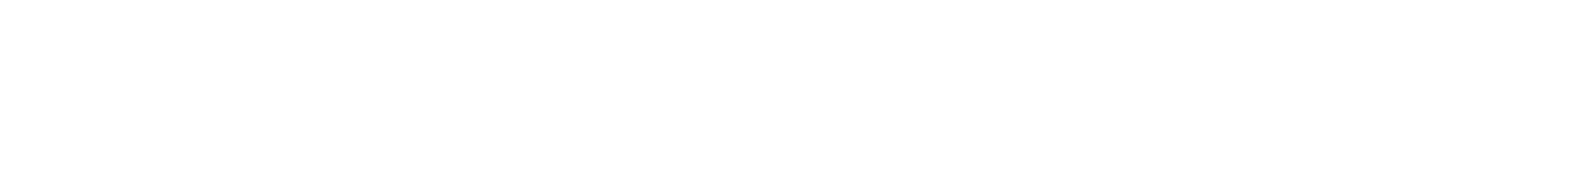 Omnicom logo grand pour les fonds sombres (PNG transparent)